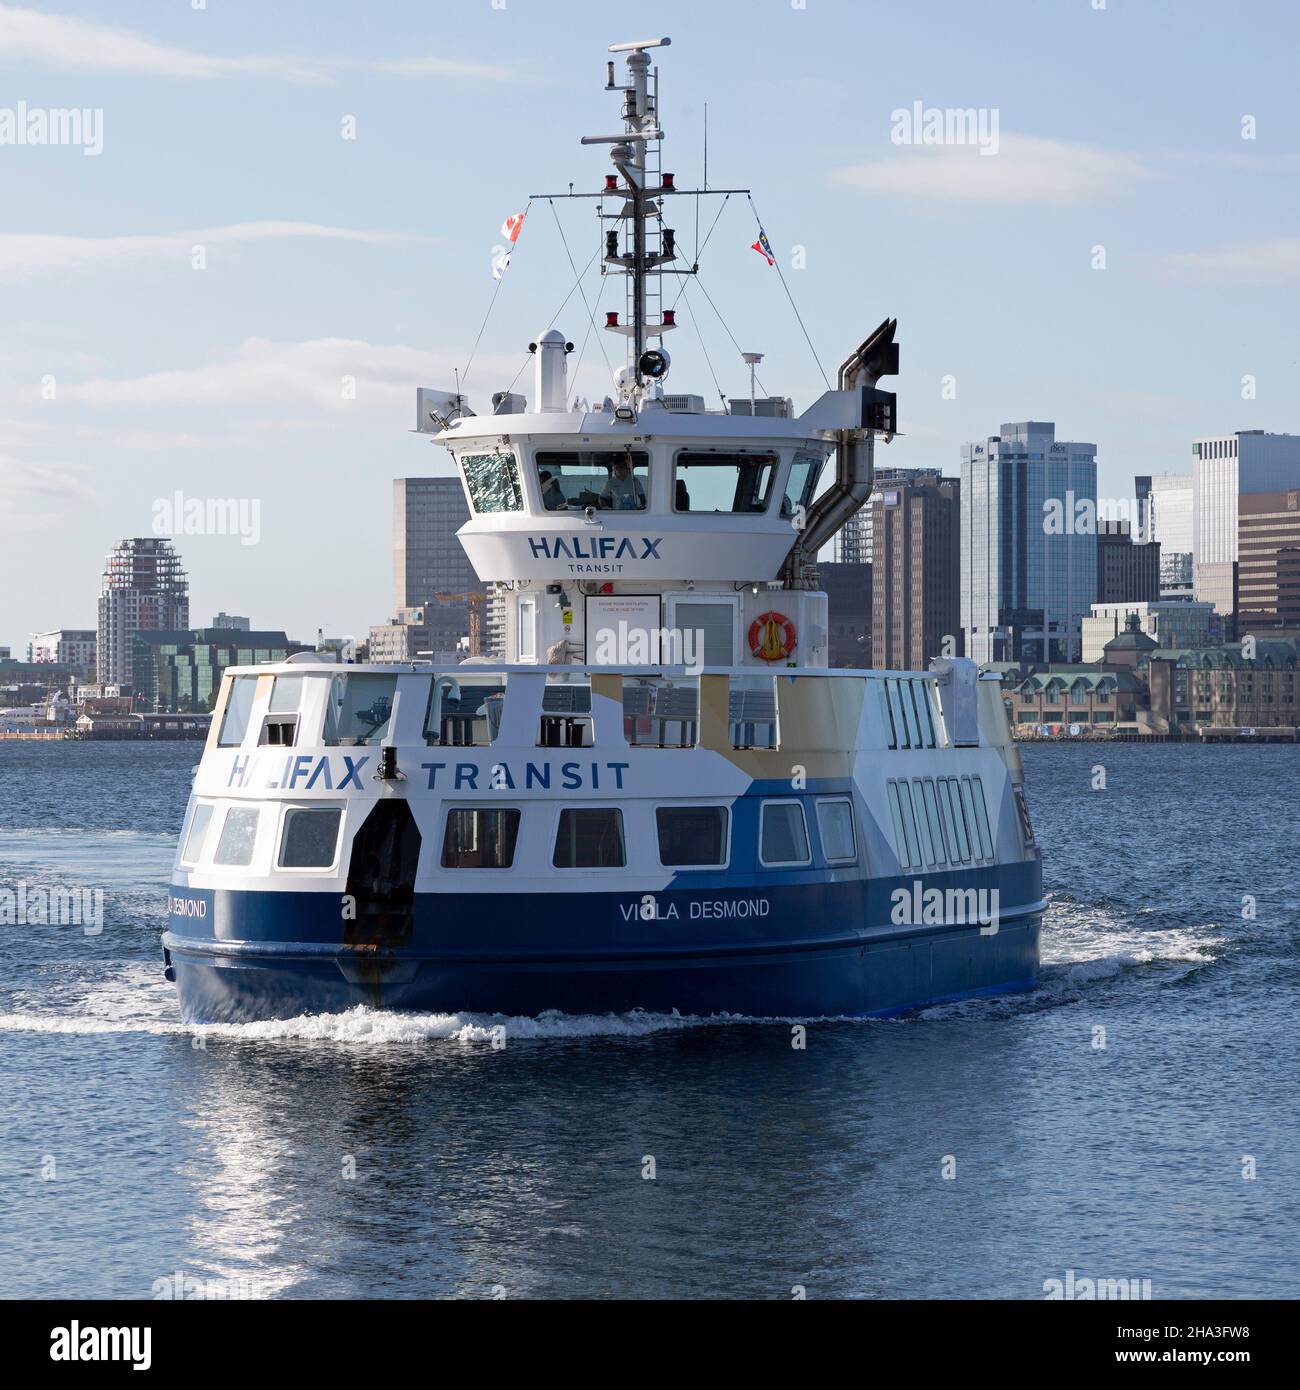 The Halifax-Dartmouth Ferry crosses Halifax Harbour in Nova Scotia, Canada. Stock Photo